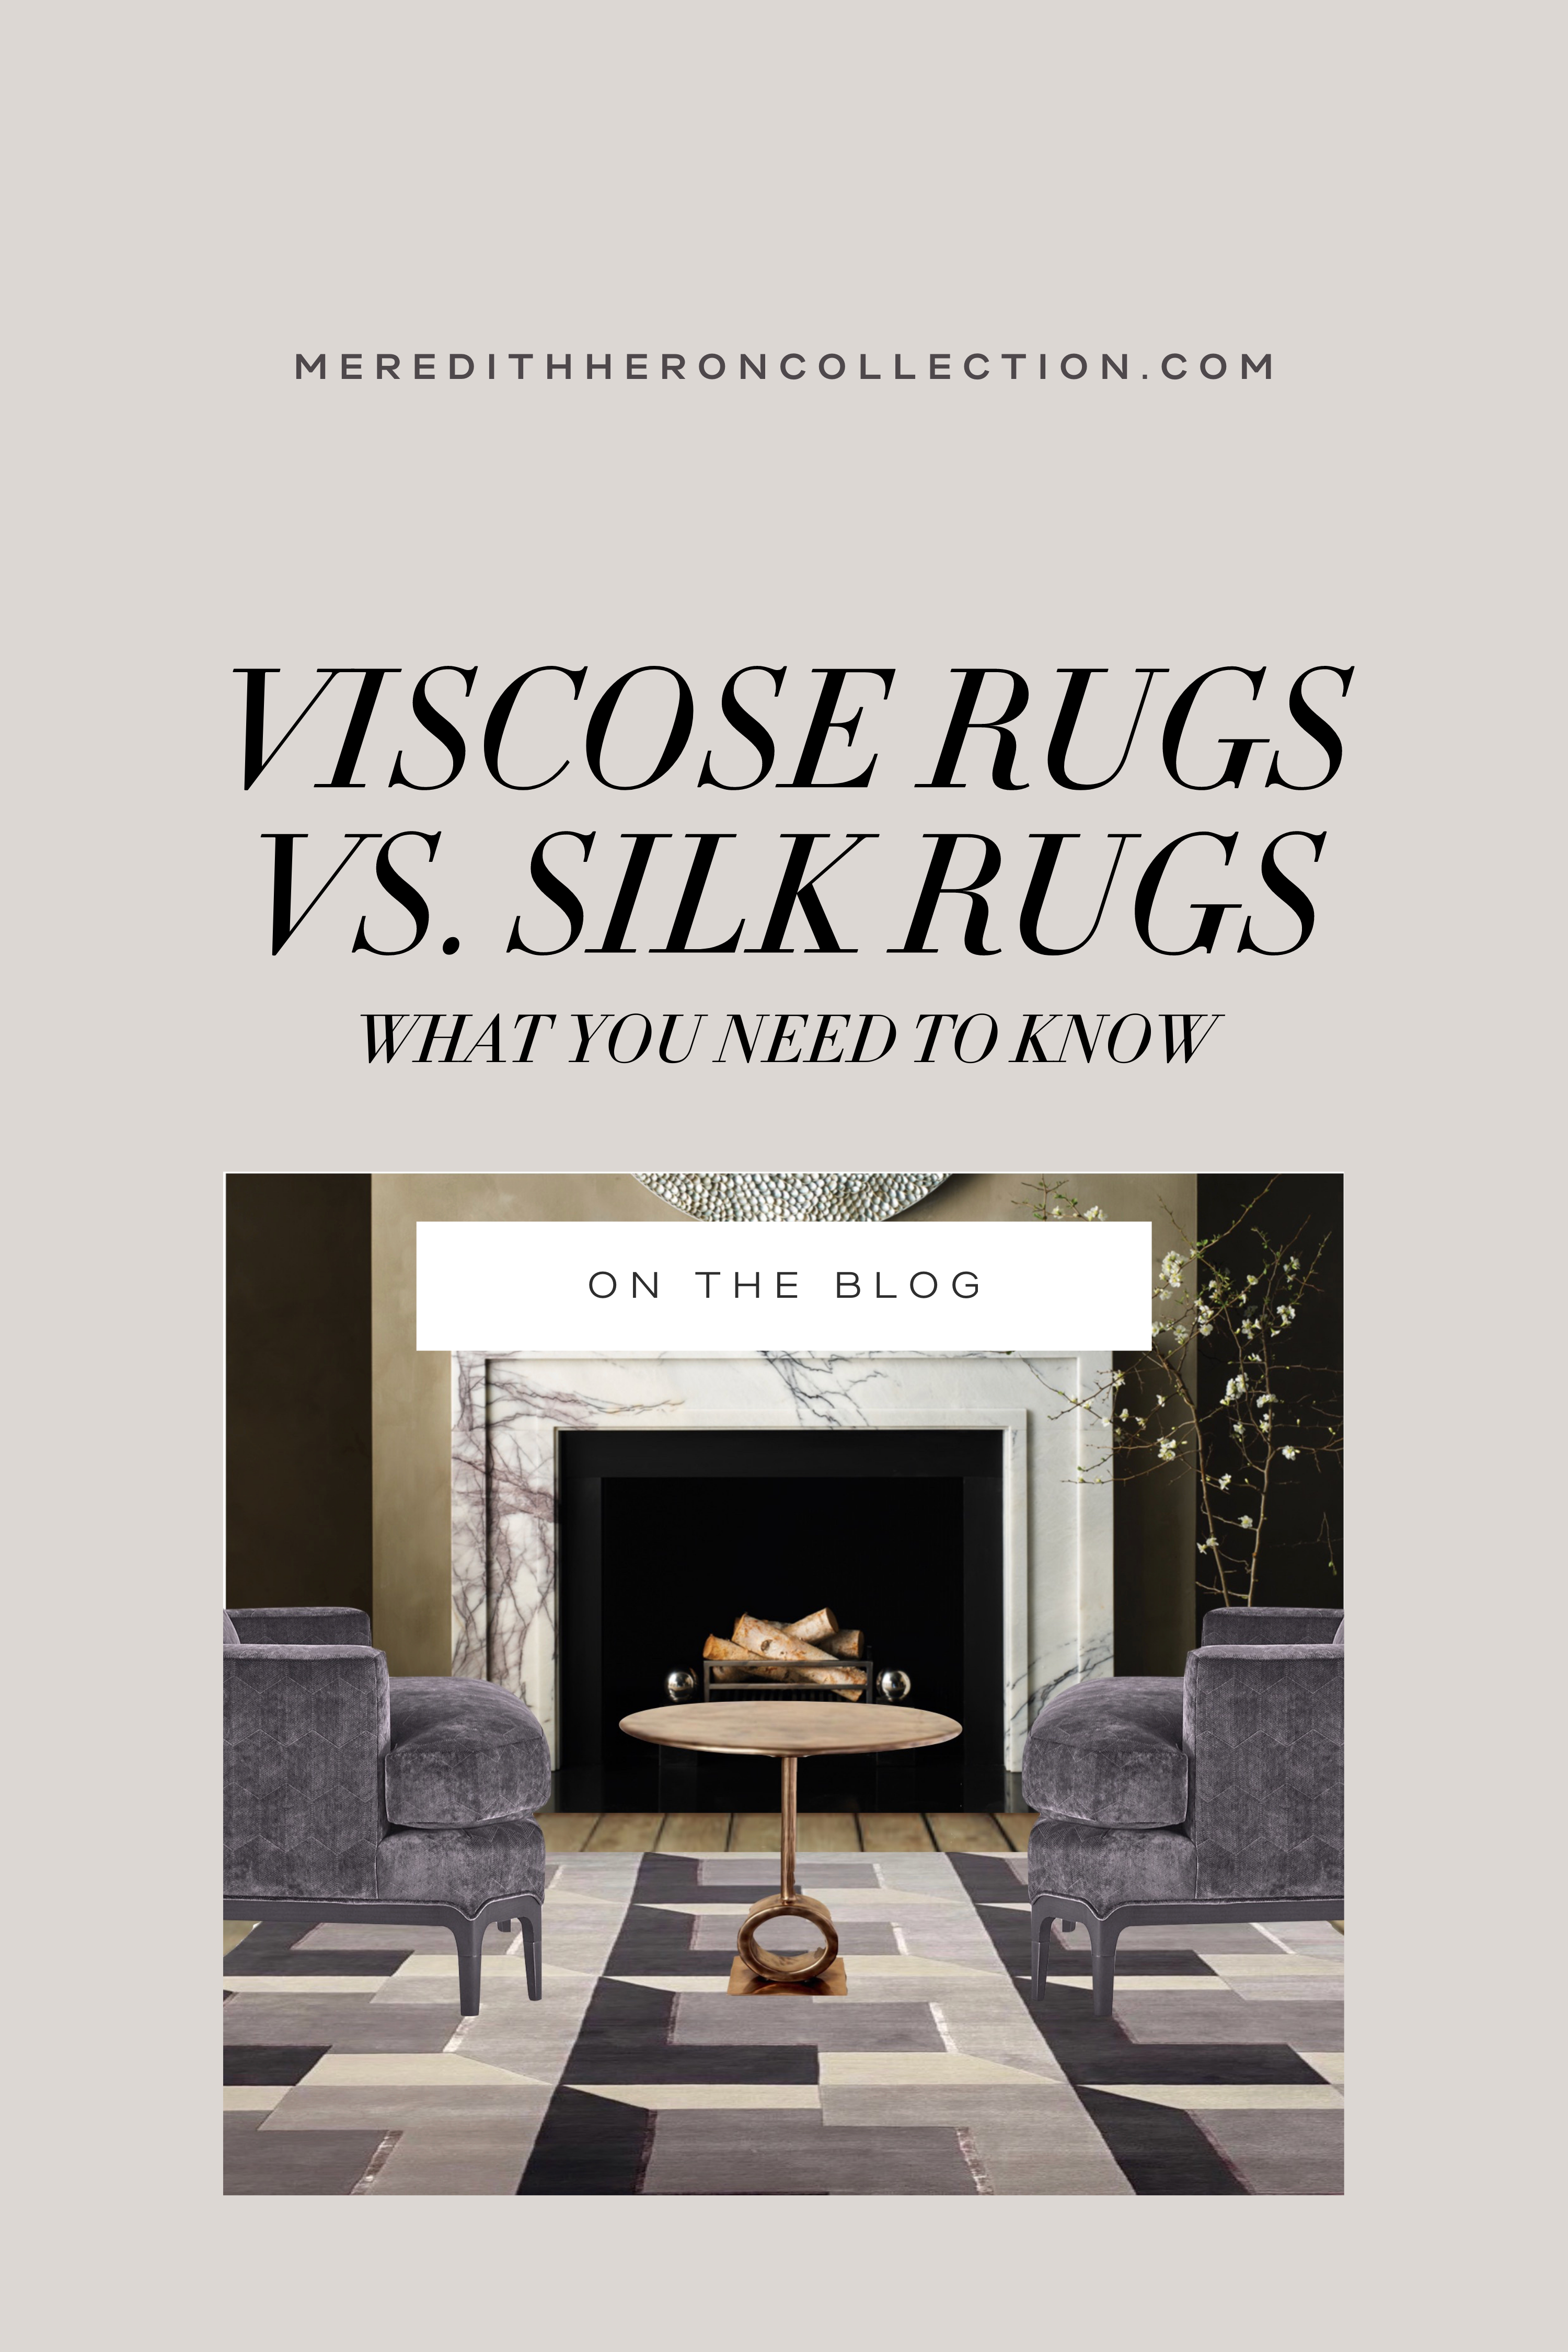 VISCOSE RUGS VS. SILK RUGS